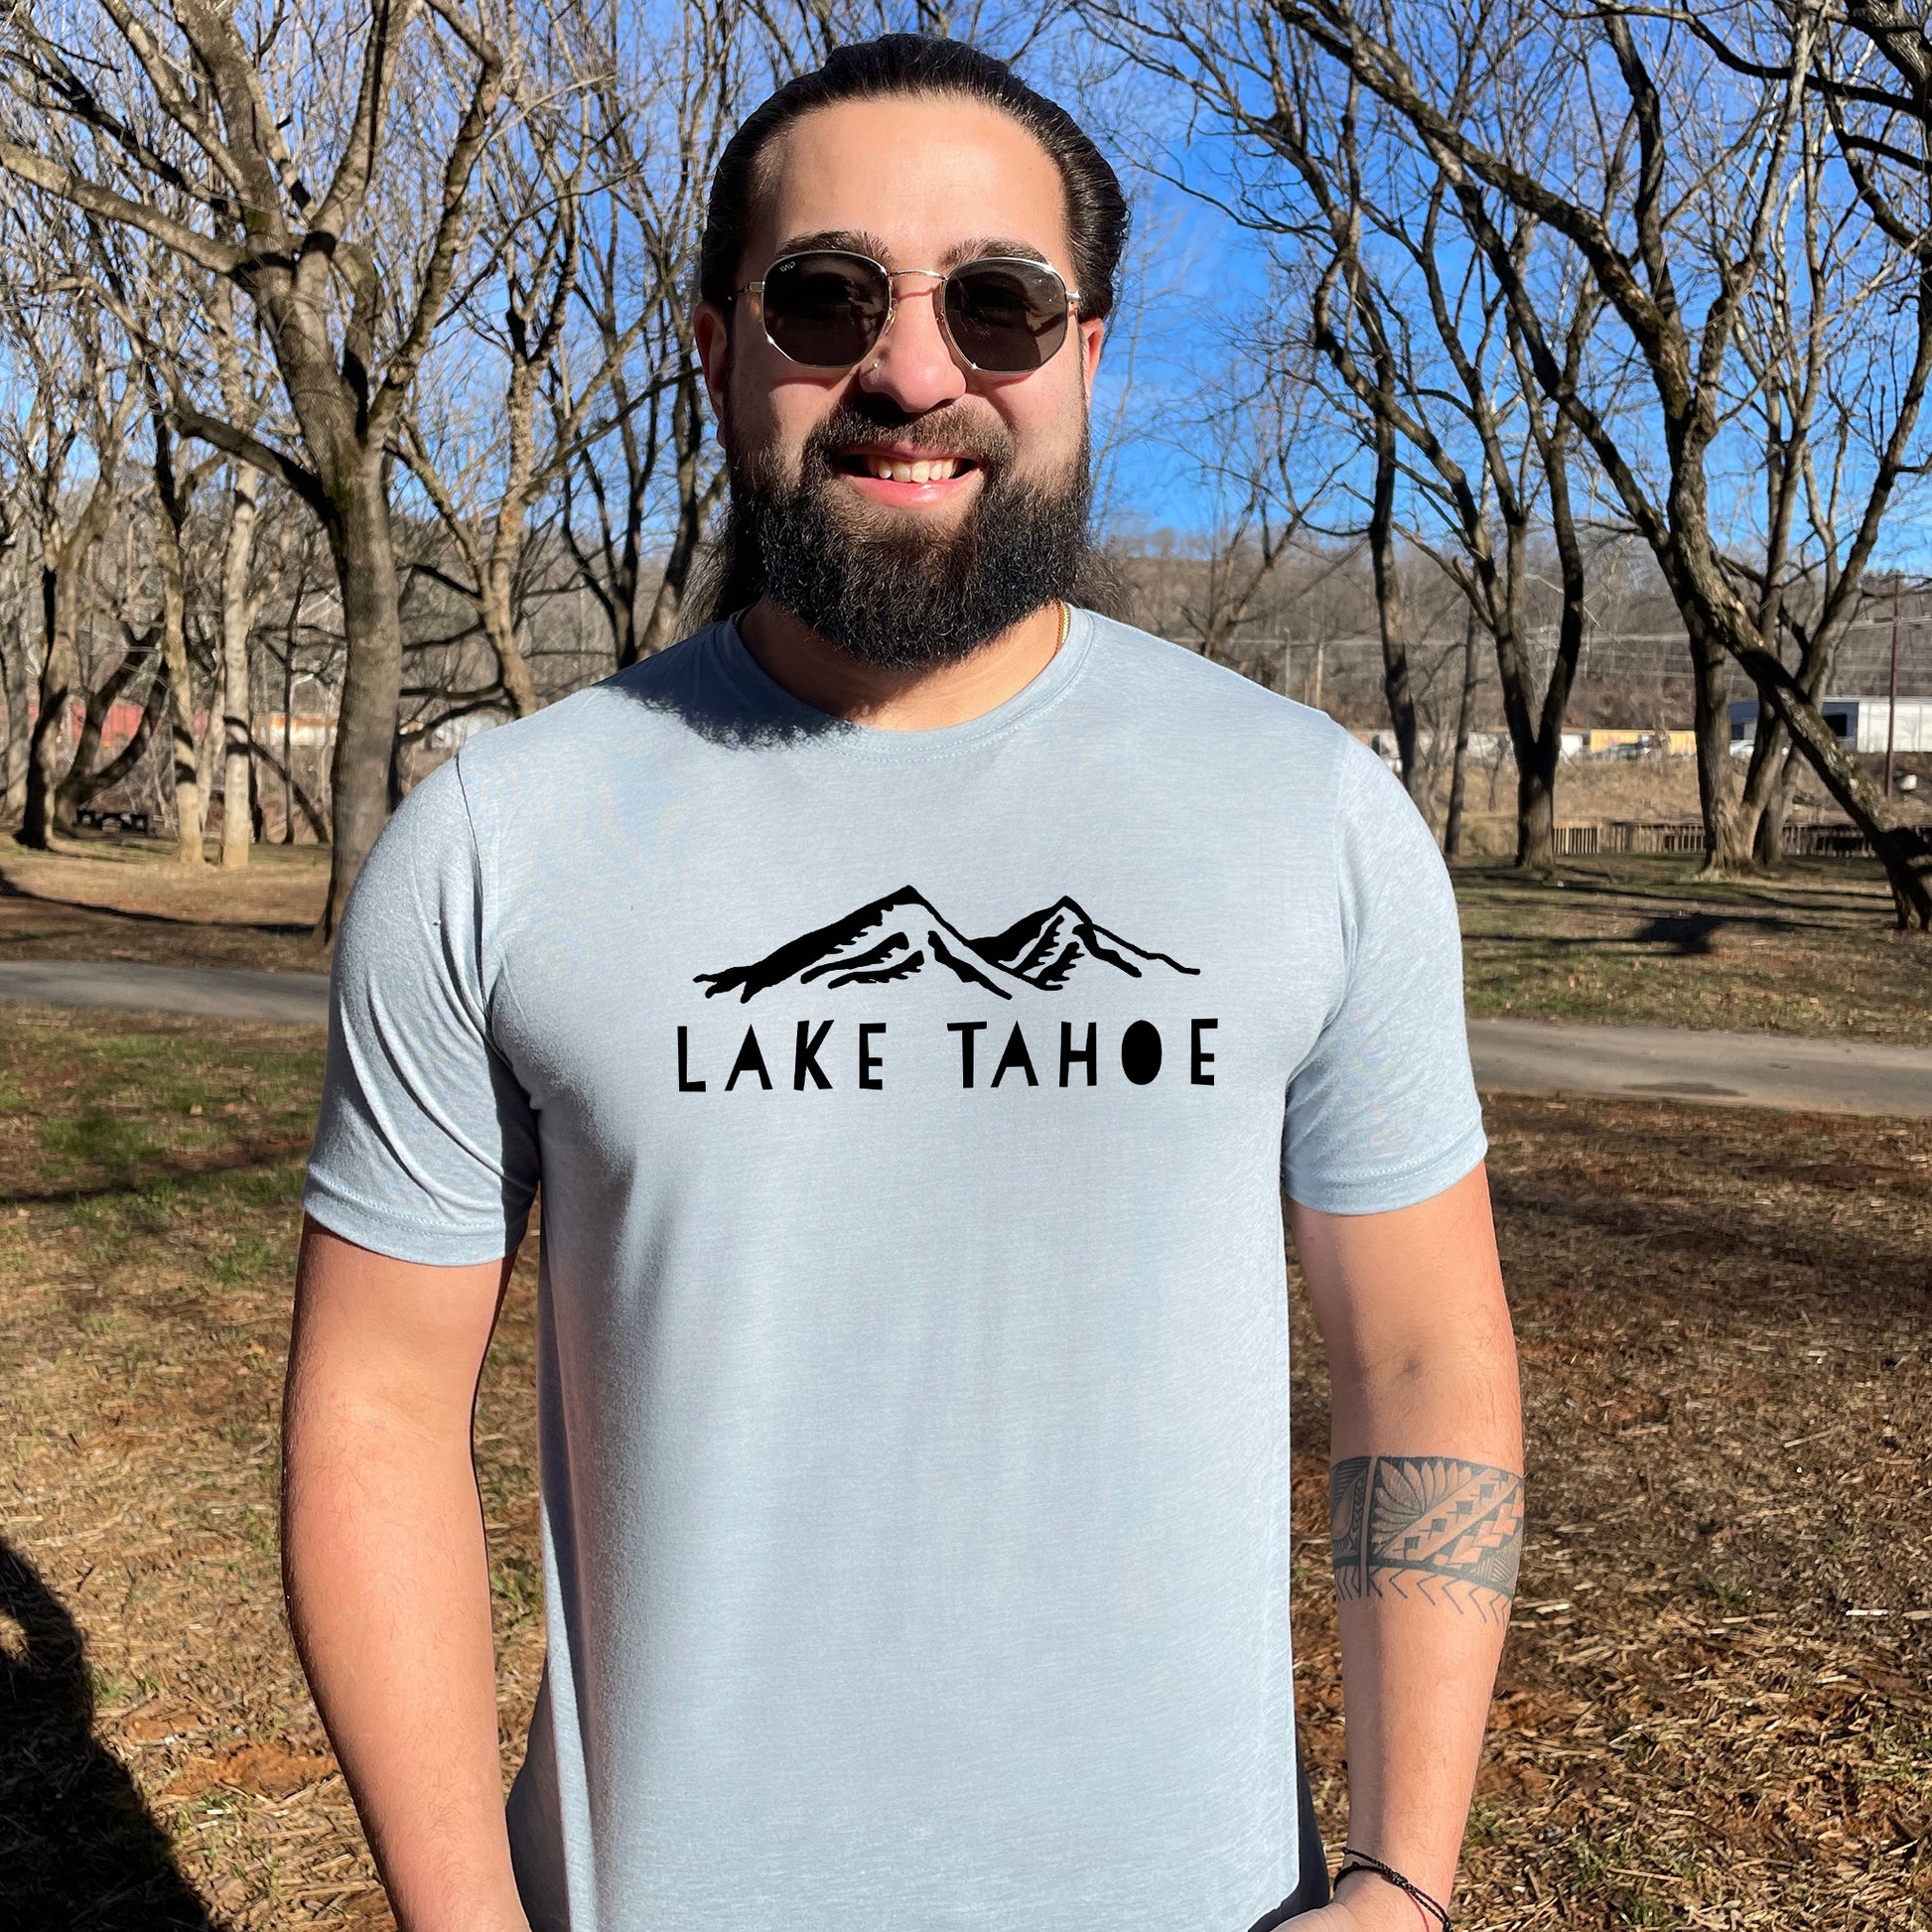 a man with a beard wearing a lake tahoe t - shirt